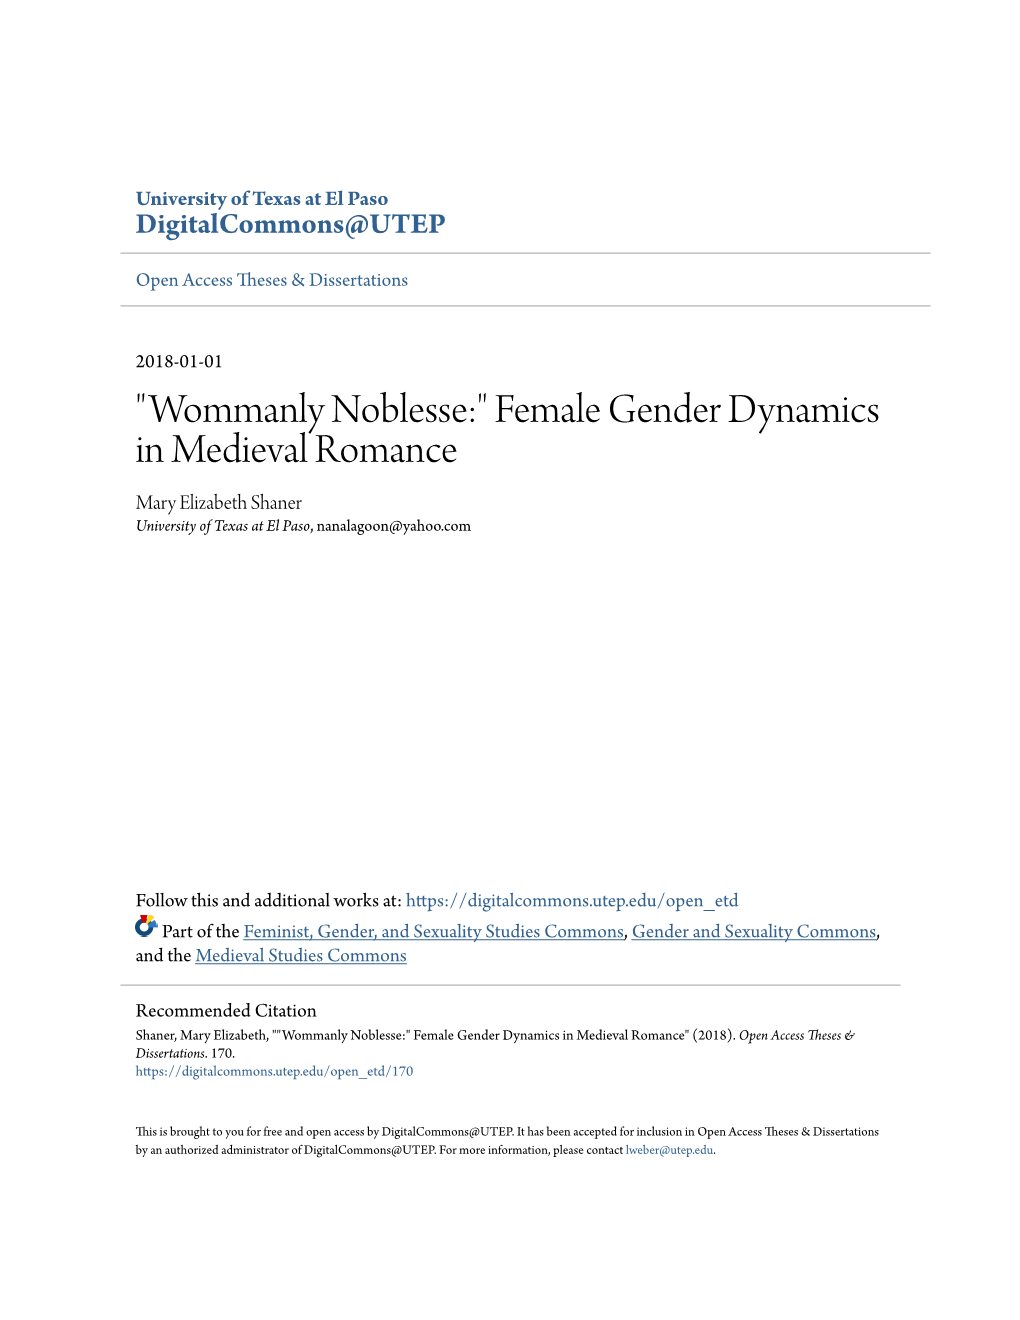 Female Gender Dynamics in Medieval Romance Mary Elizabeth Shaner University of Texas at El Paso, Nanalagoon@Yahoo.Com